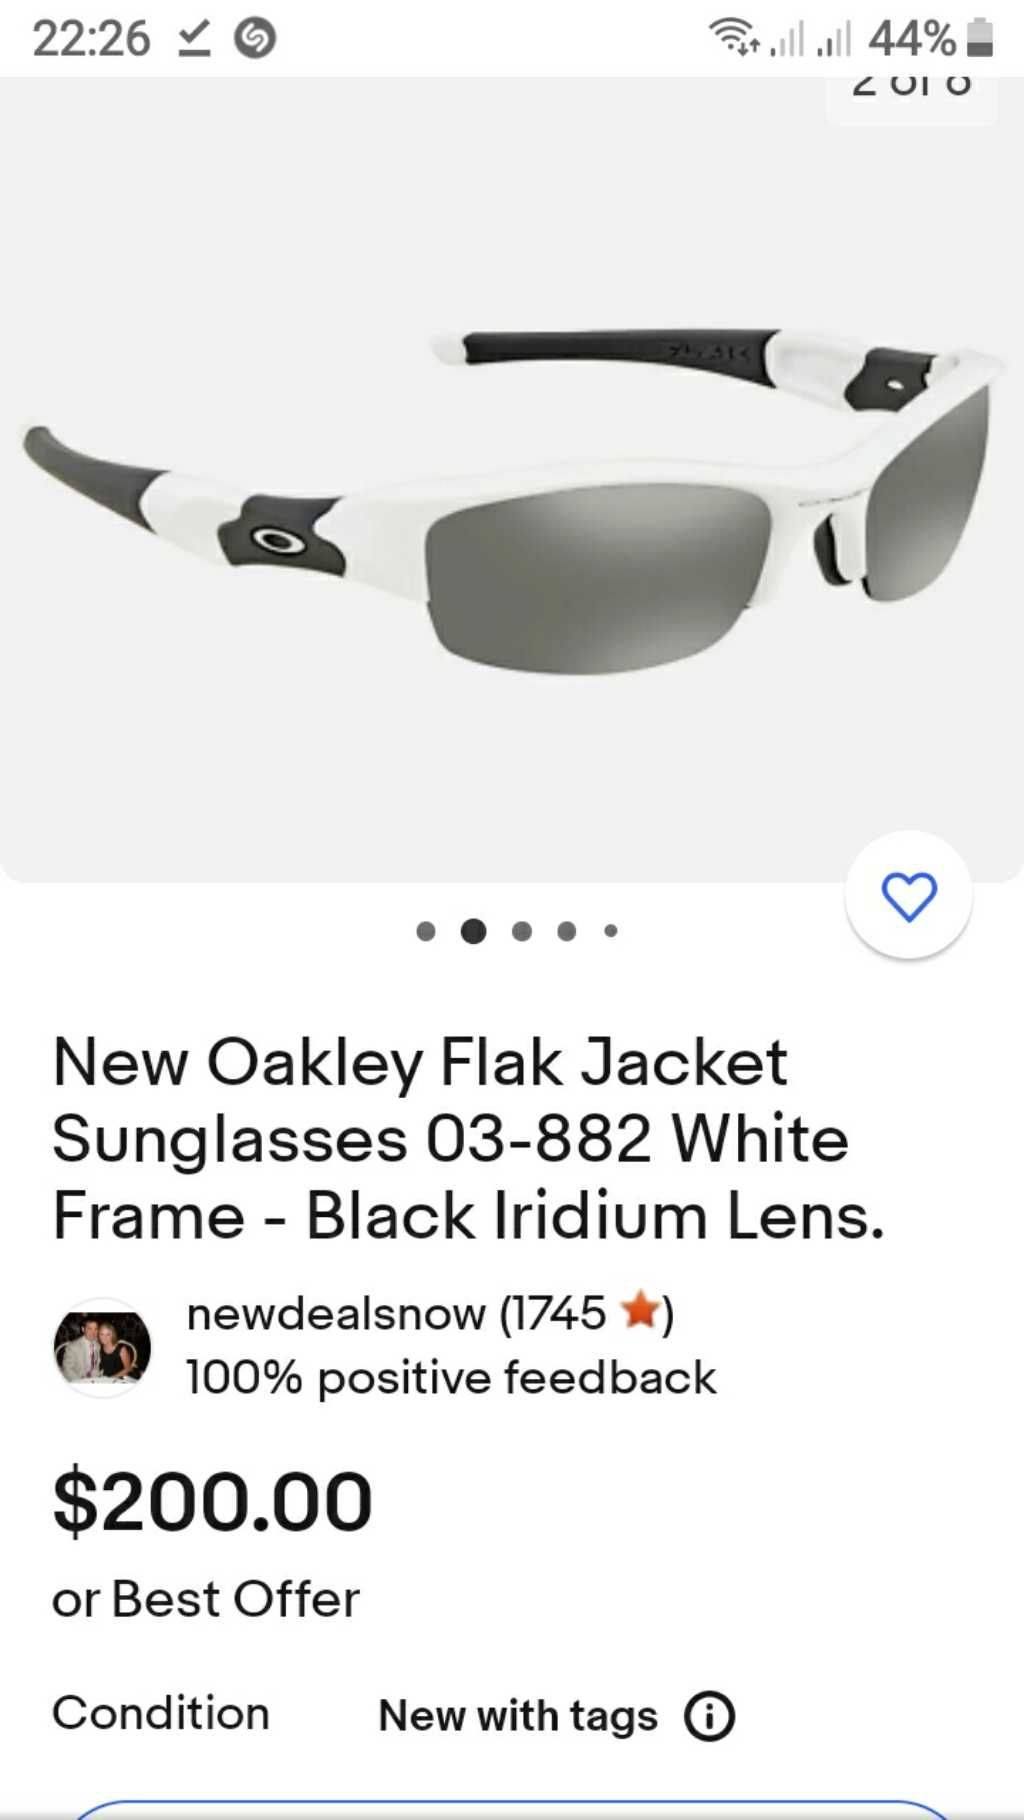 Солнцезащитные очки OAKLEY Flak Jacket 03-882 made in USA